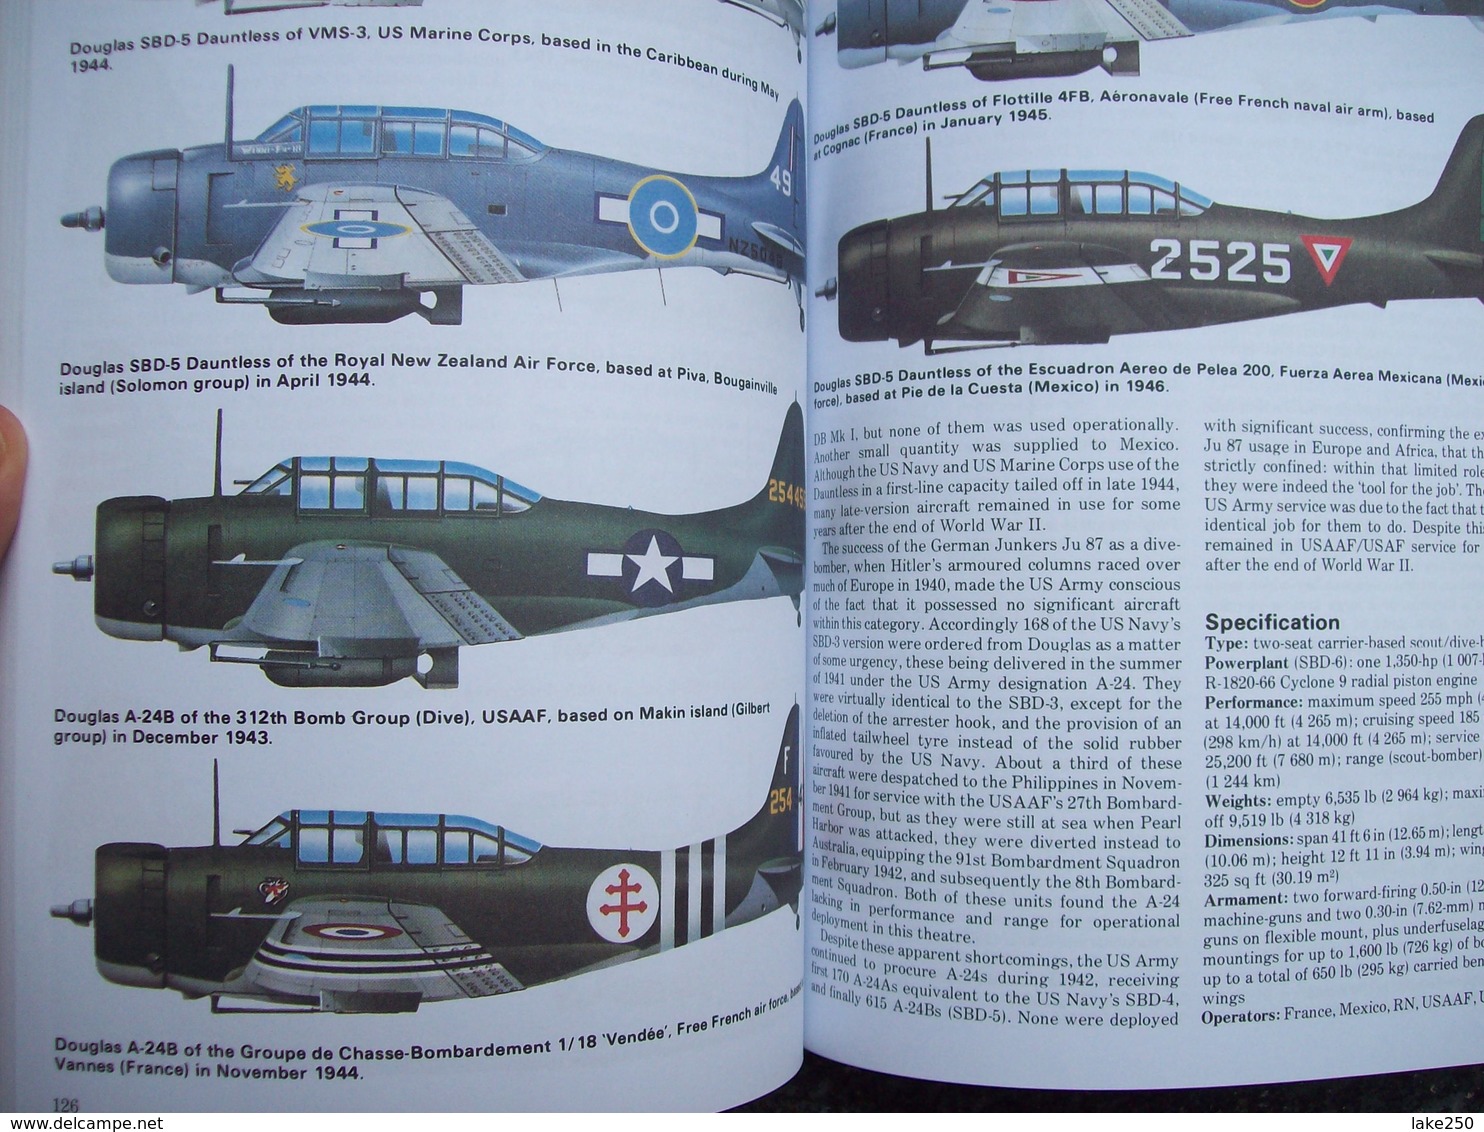 AMERICAN AIRCRAFT OF WORLD WAR II - Transportes